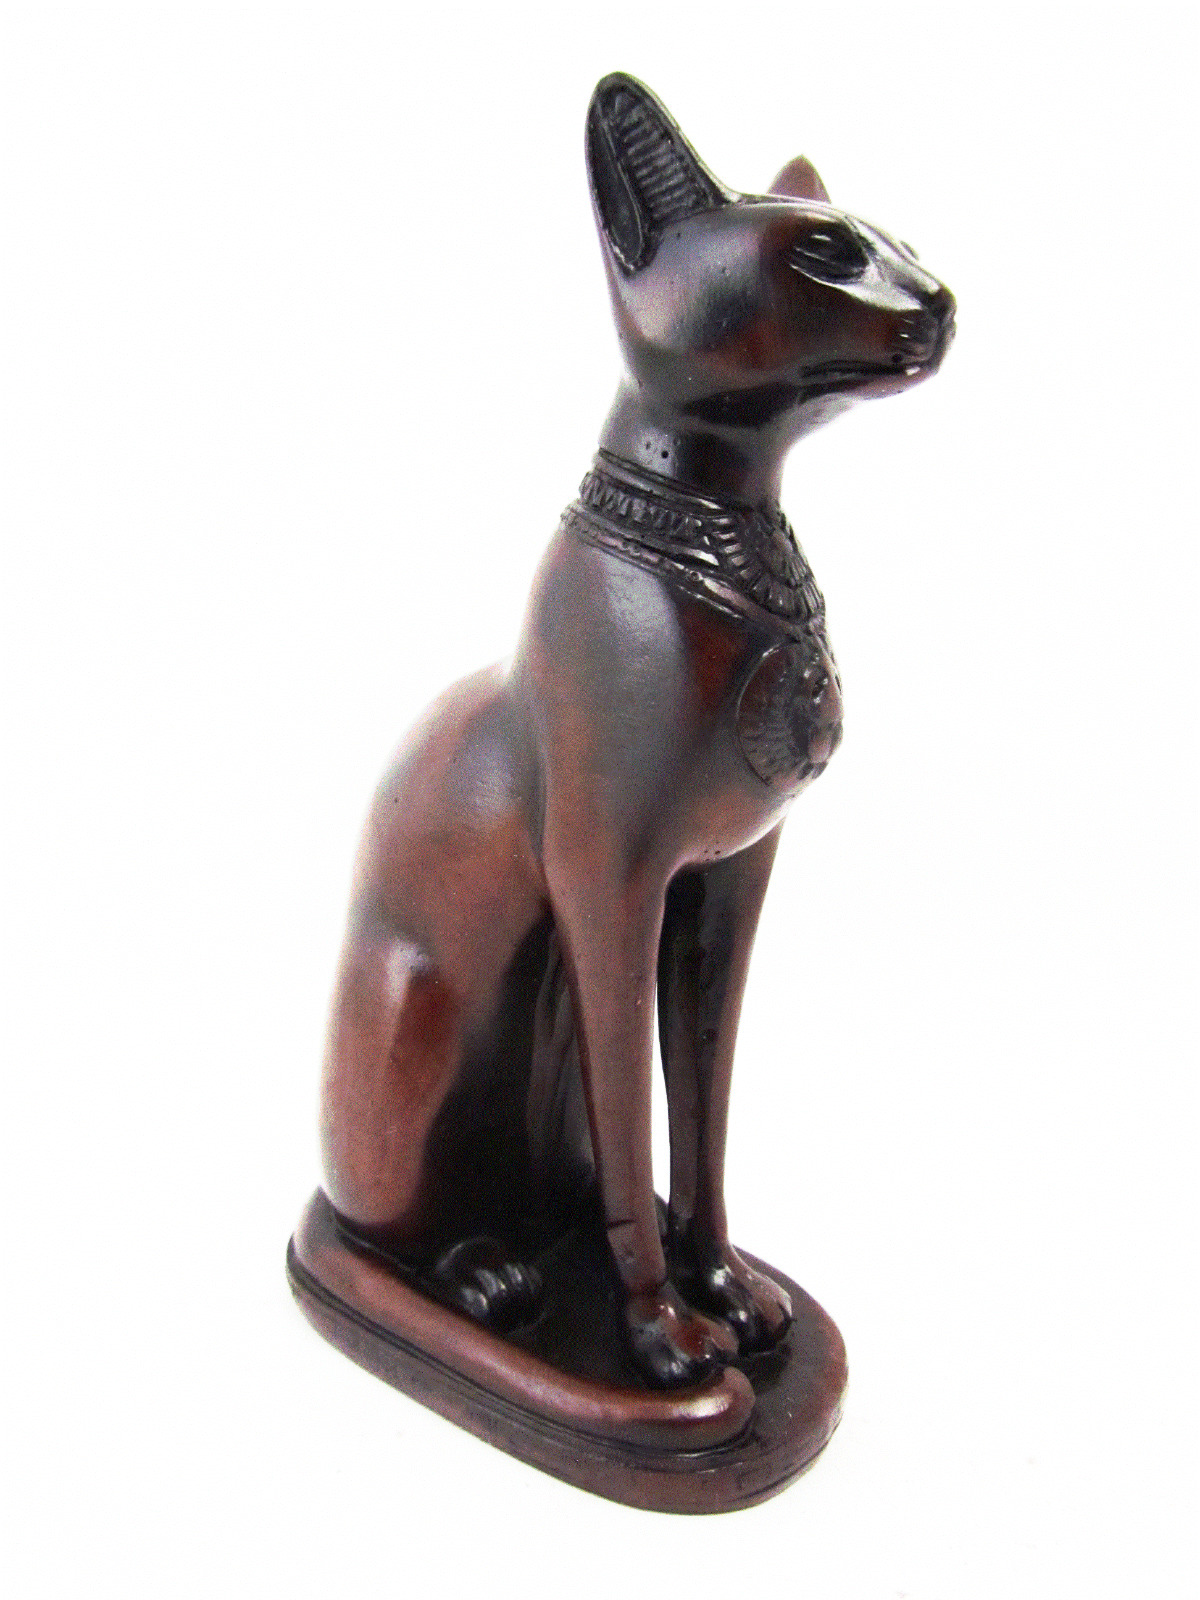 Egyptian Bastet Cat Statue Small Resin Ancient Egypt Figurine Home Desk Decor 5\